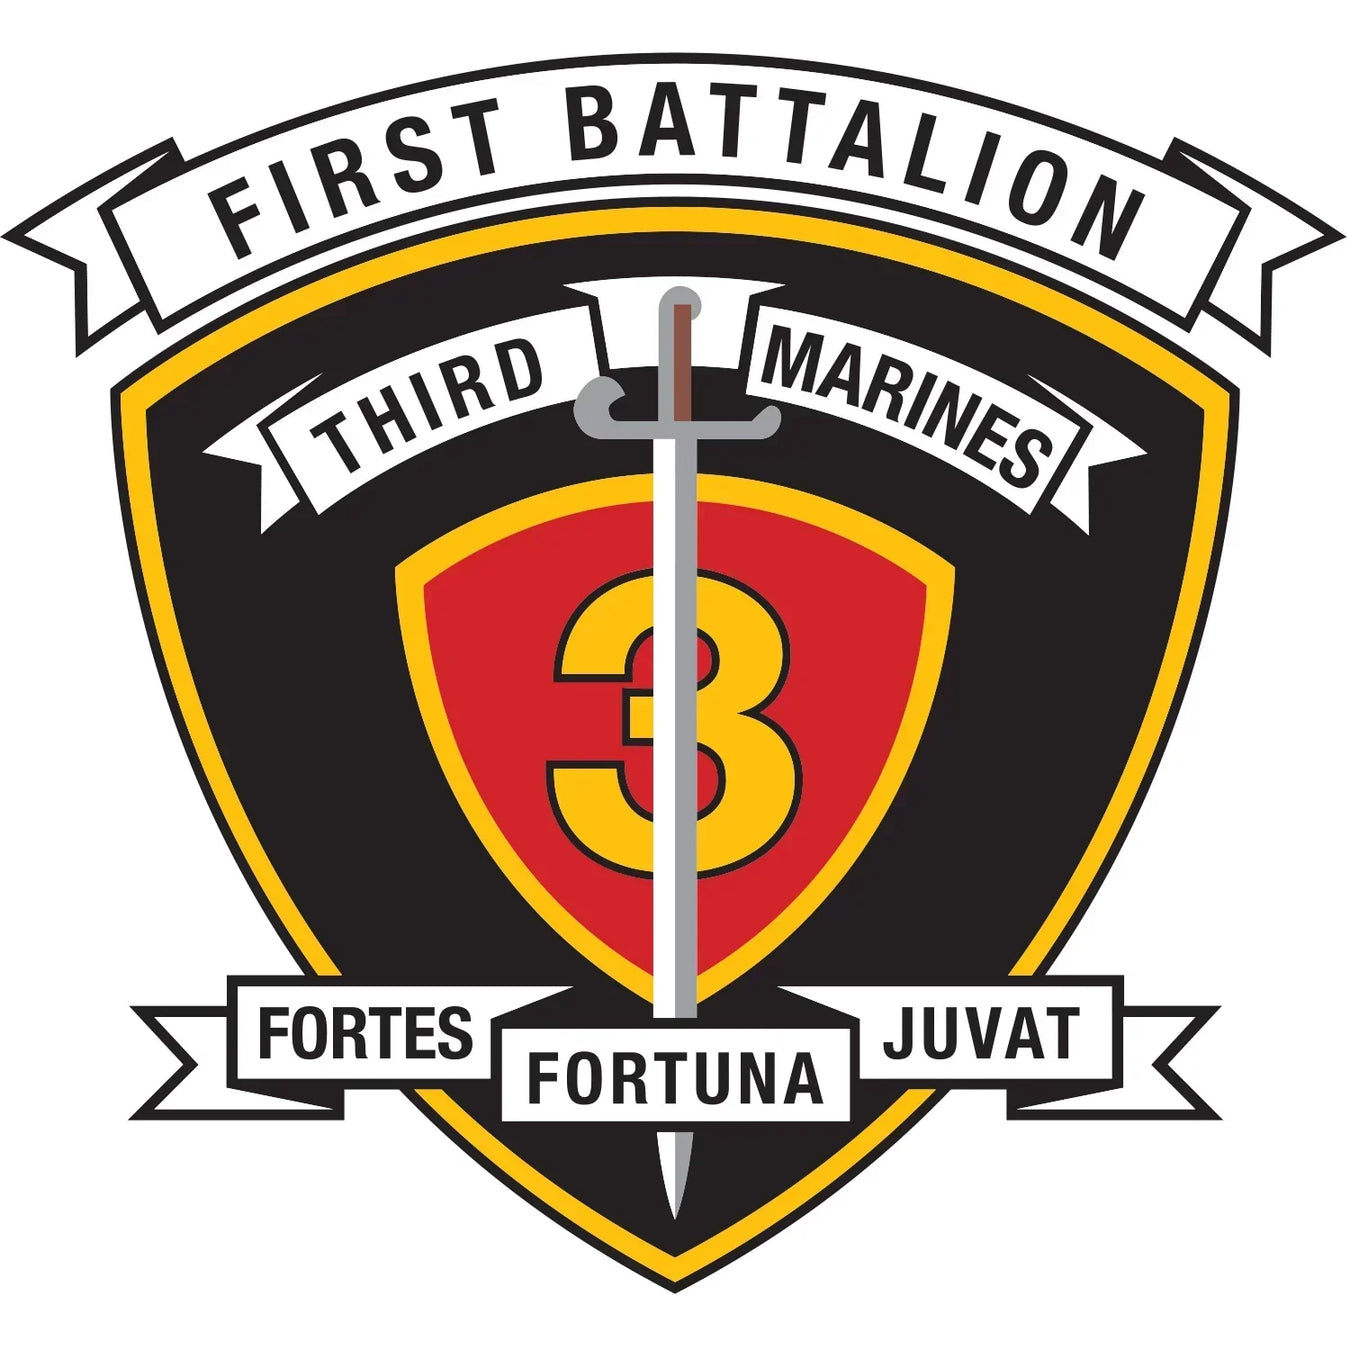 1st Battalion, 3rd Marines (1/3 Marines)